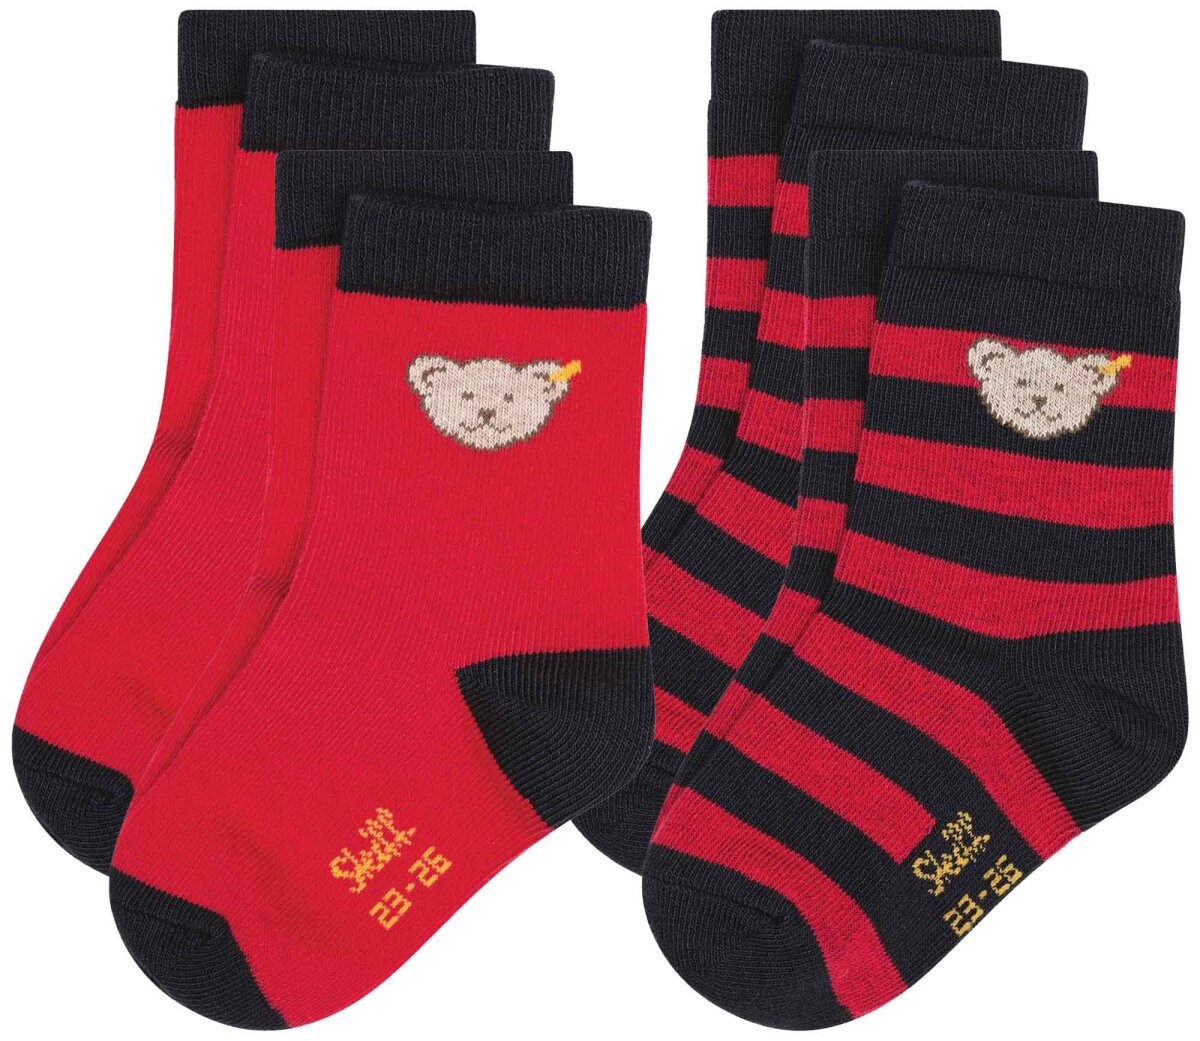 Steiff Kinder Unisex Socken, 4er Pack - Bio-Baumwolle, Teddy-Motiv, uni/gestreift Rot 27-30